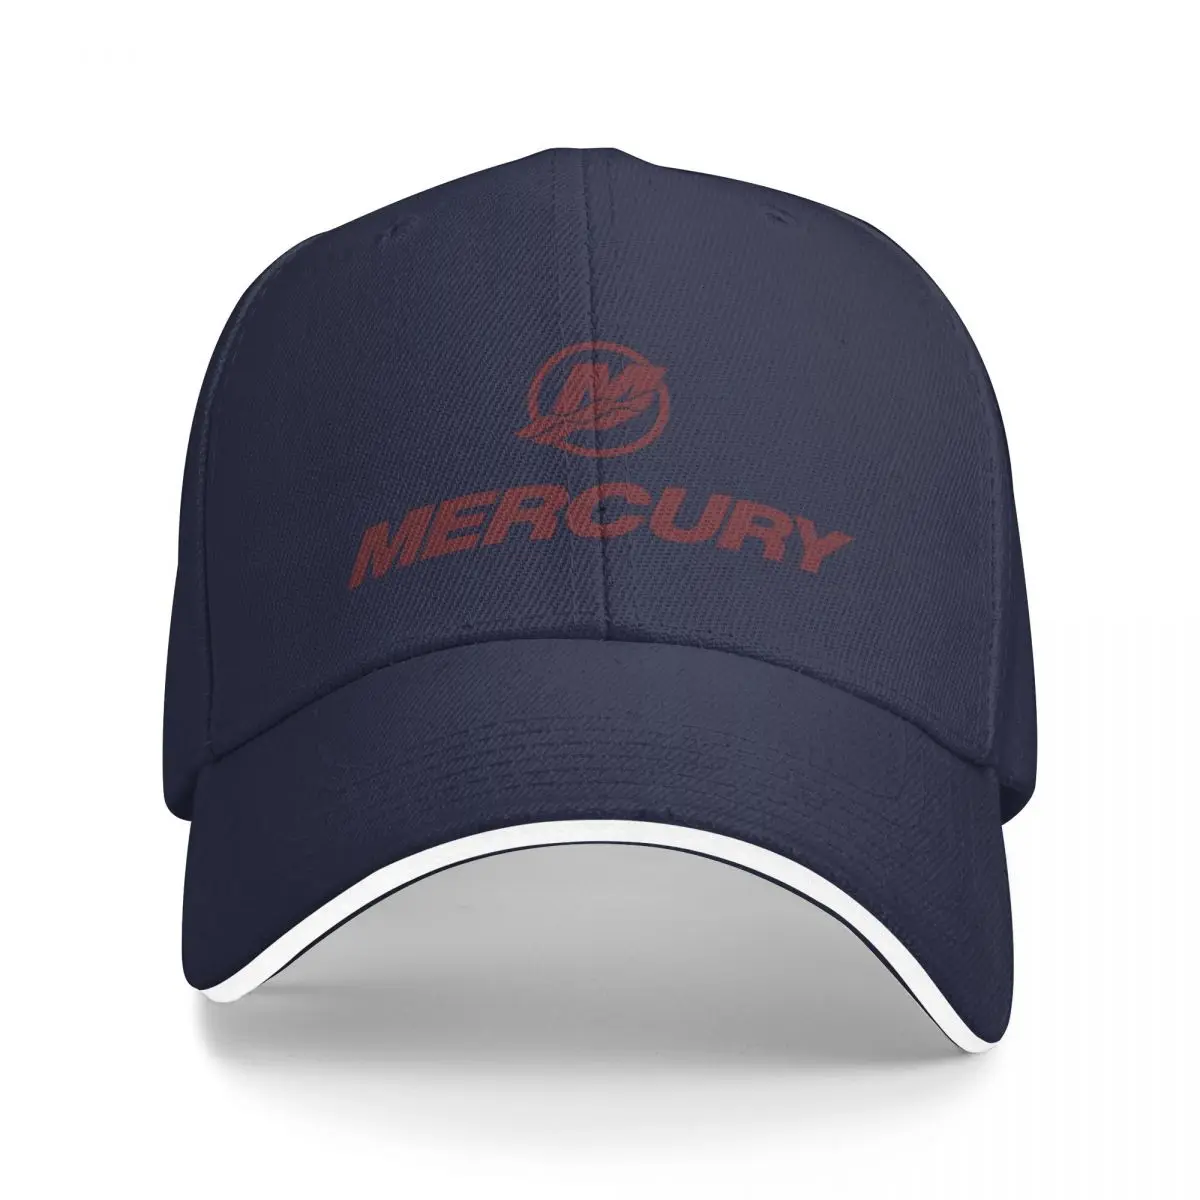 Absolute Cool Mercury Marine Design Cap Baseball Cap beach vintage Hat  female Men's - AliExpress